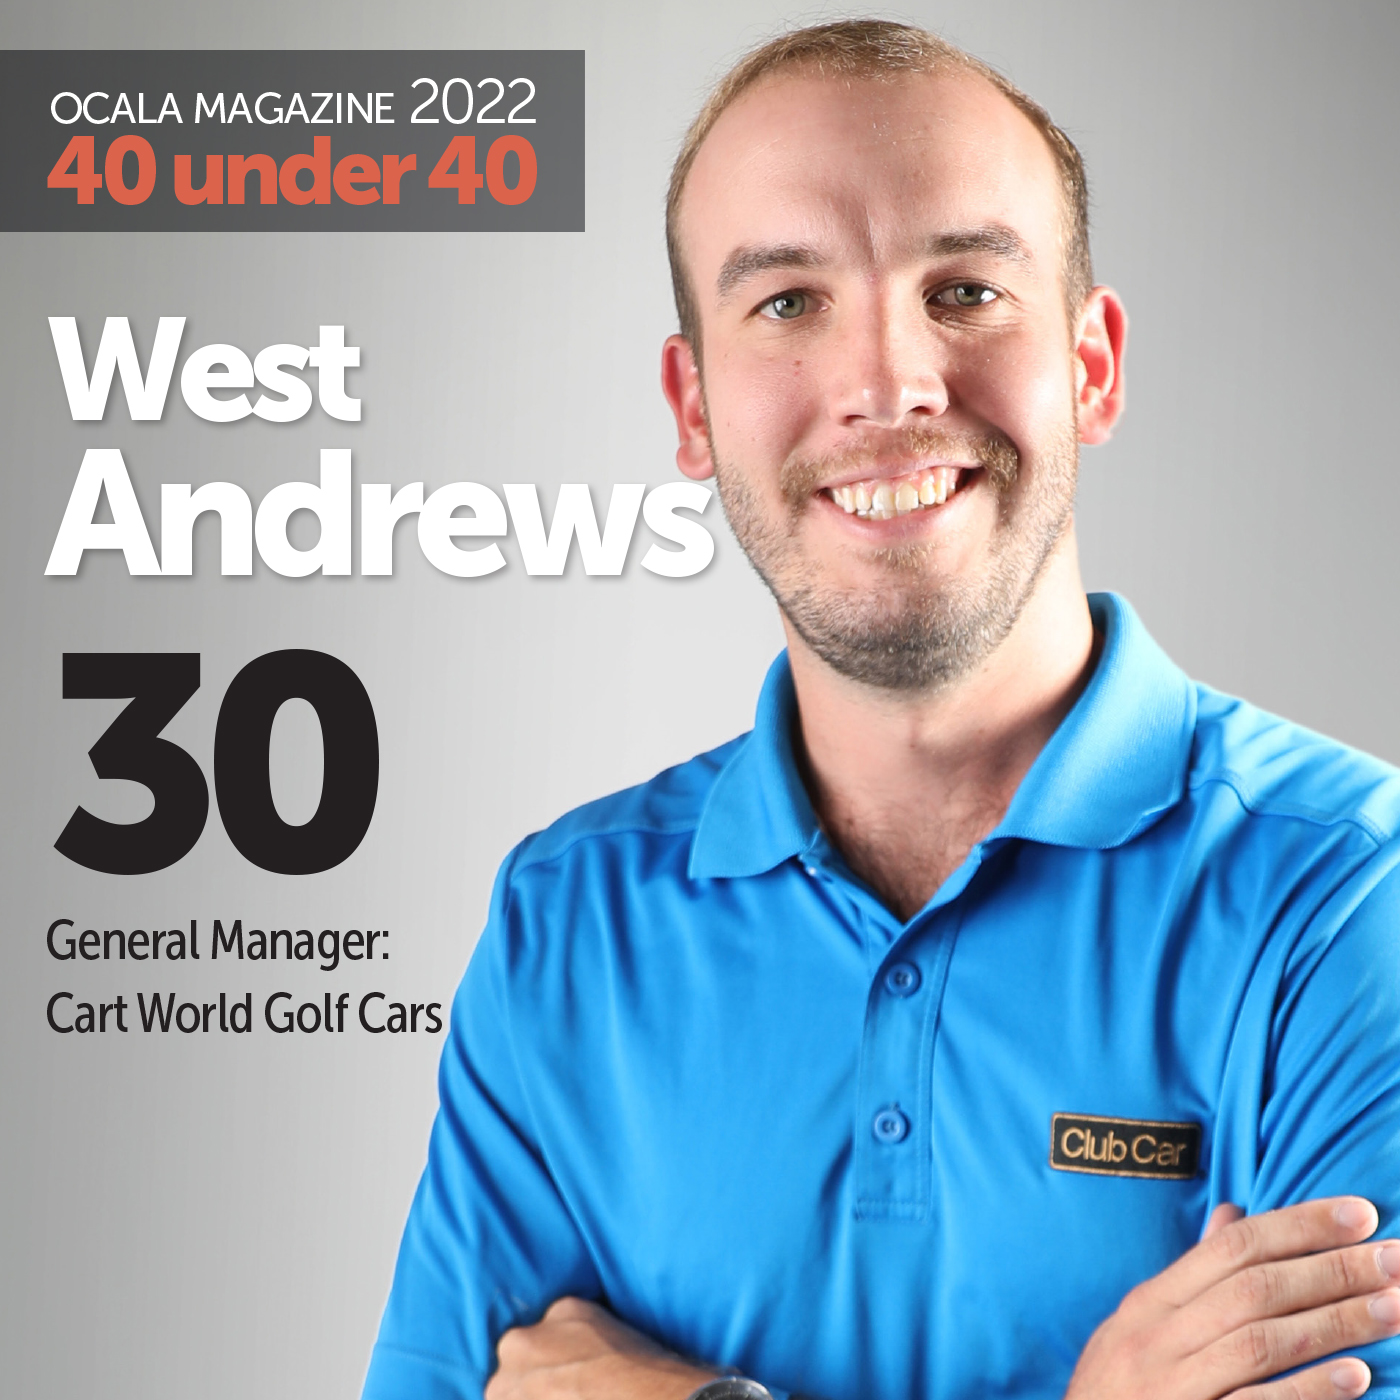 West Andrews Ocala Magazine 2022 40 under 40